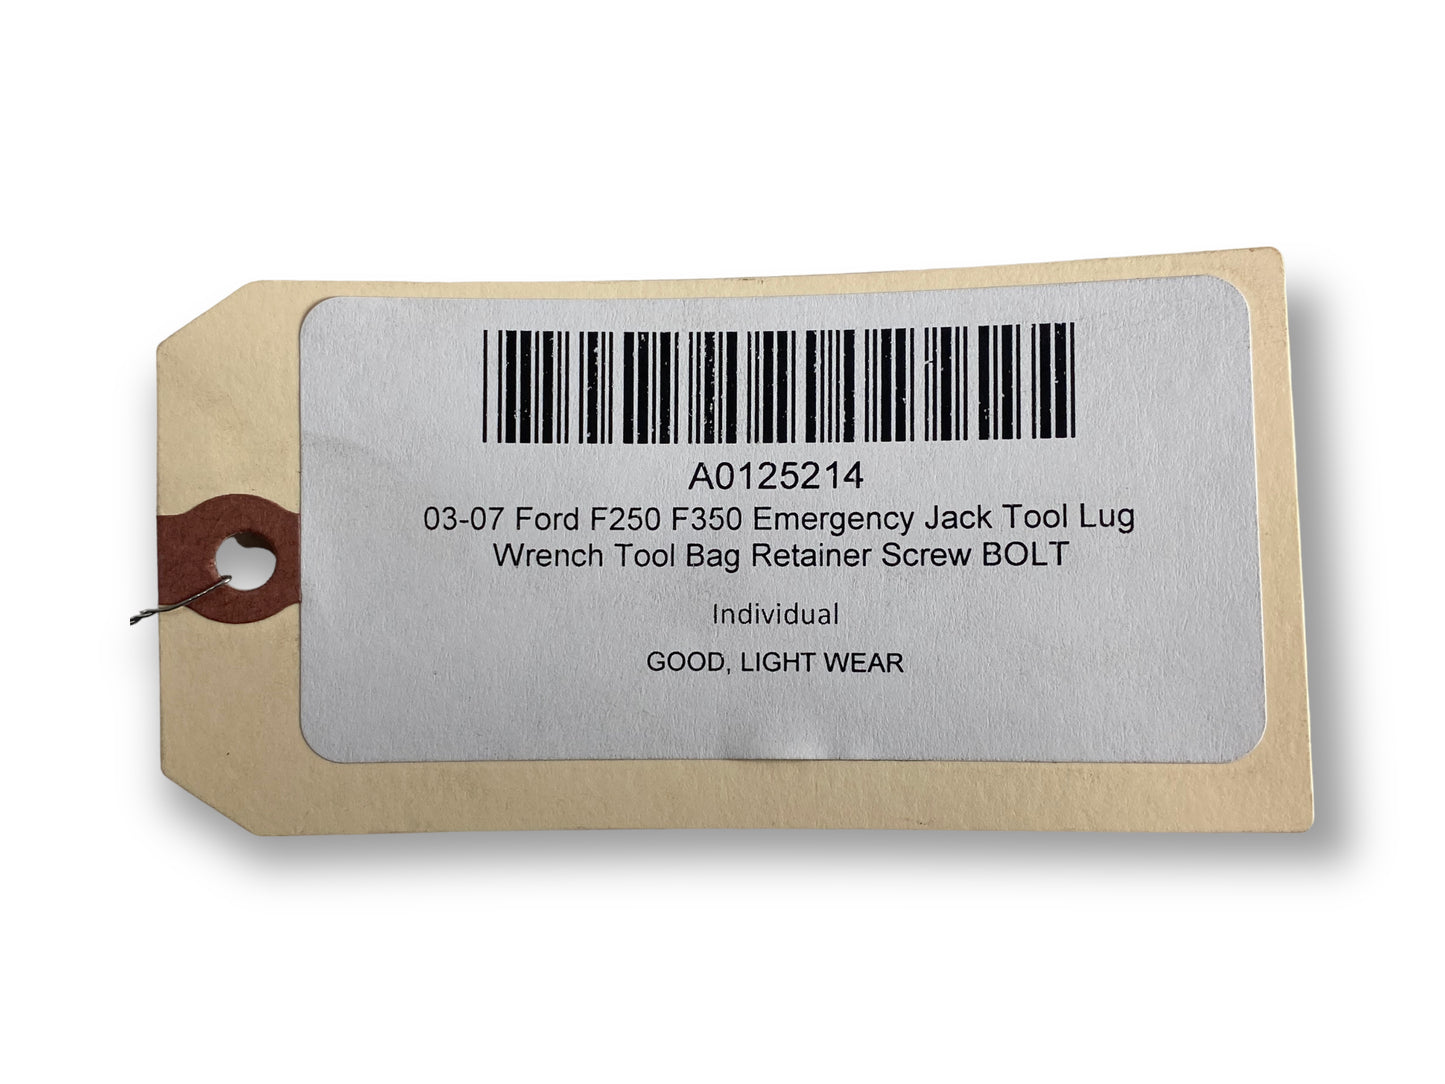 03-07 Ford F250 F350 Emergency Jack Tool Lug Wrench Tool Bag Retainer Screw Bolt